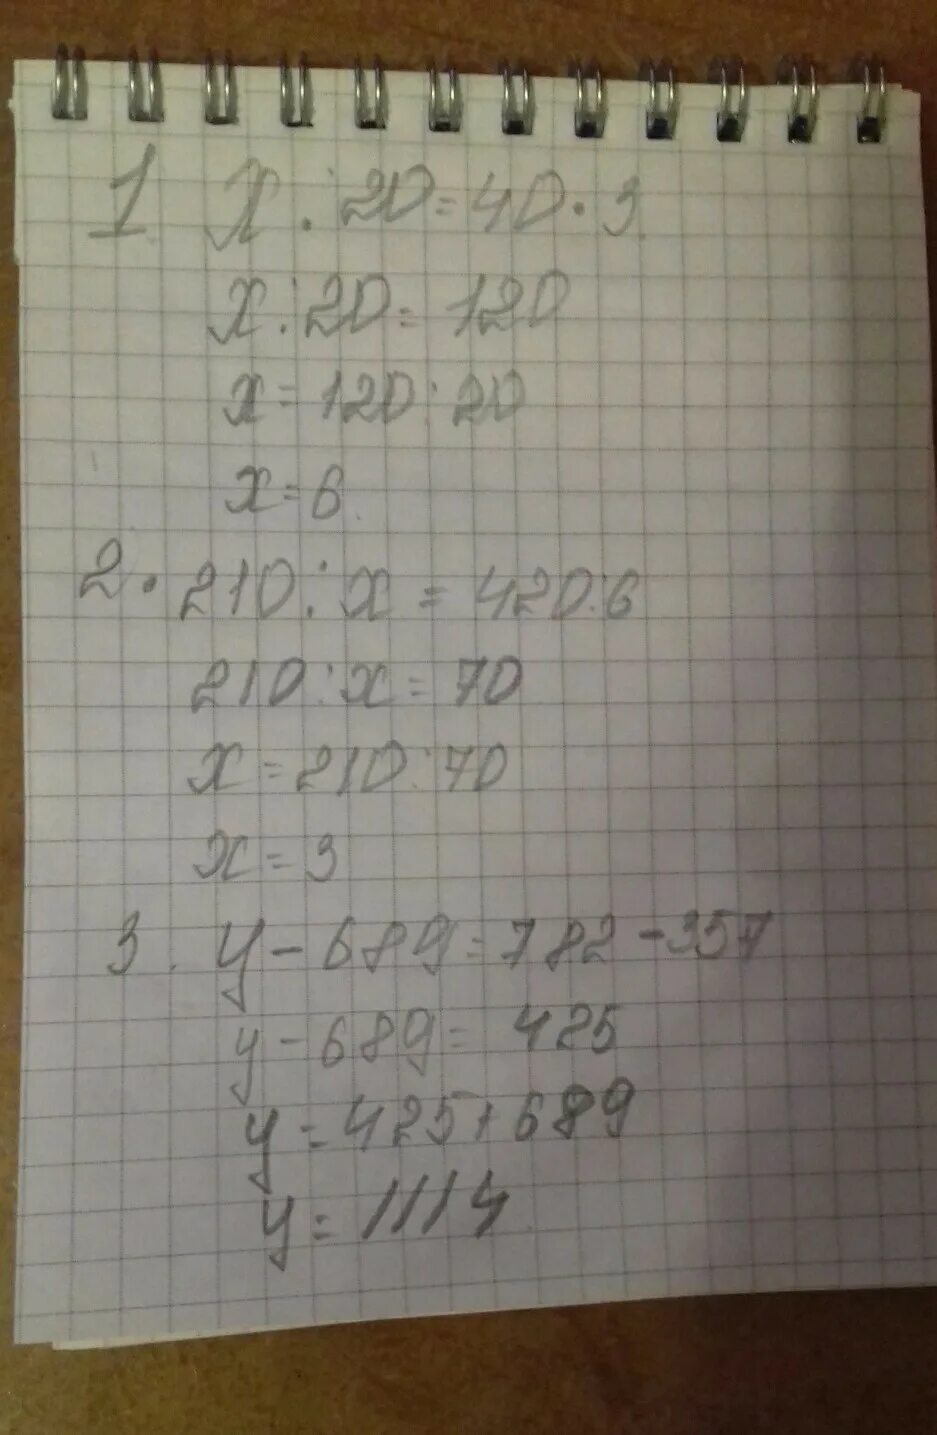 70 6 40 20. 210:Х=420:6. Х 20 40 3 решить уравнение. Х:20=40*3. X / 20 = 40 * 3 210 / X = 420 / 6.